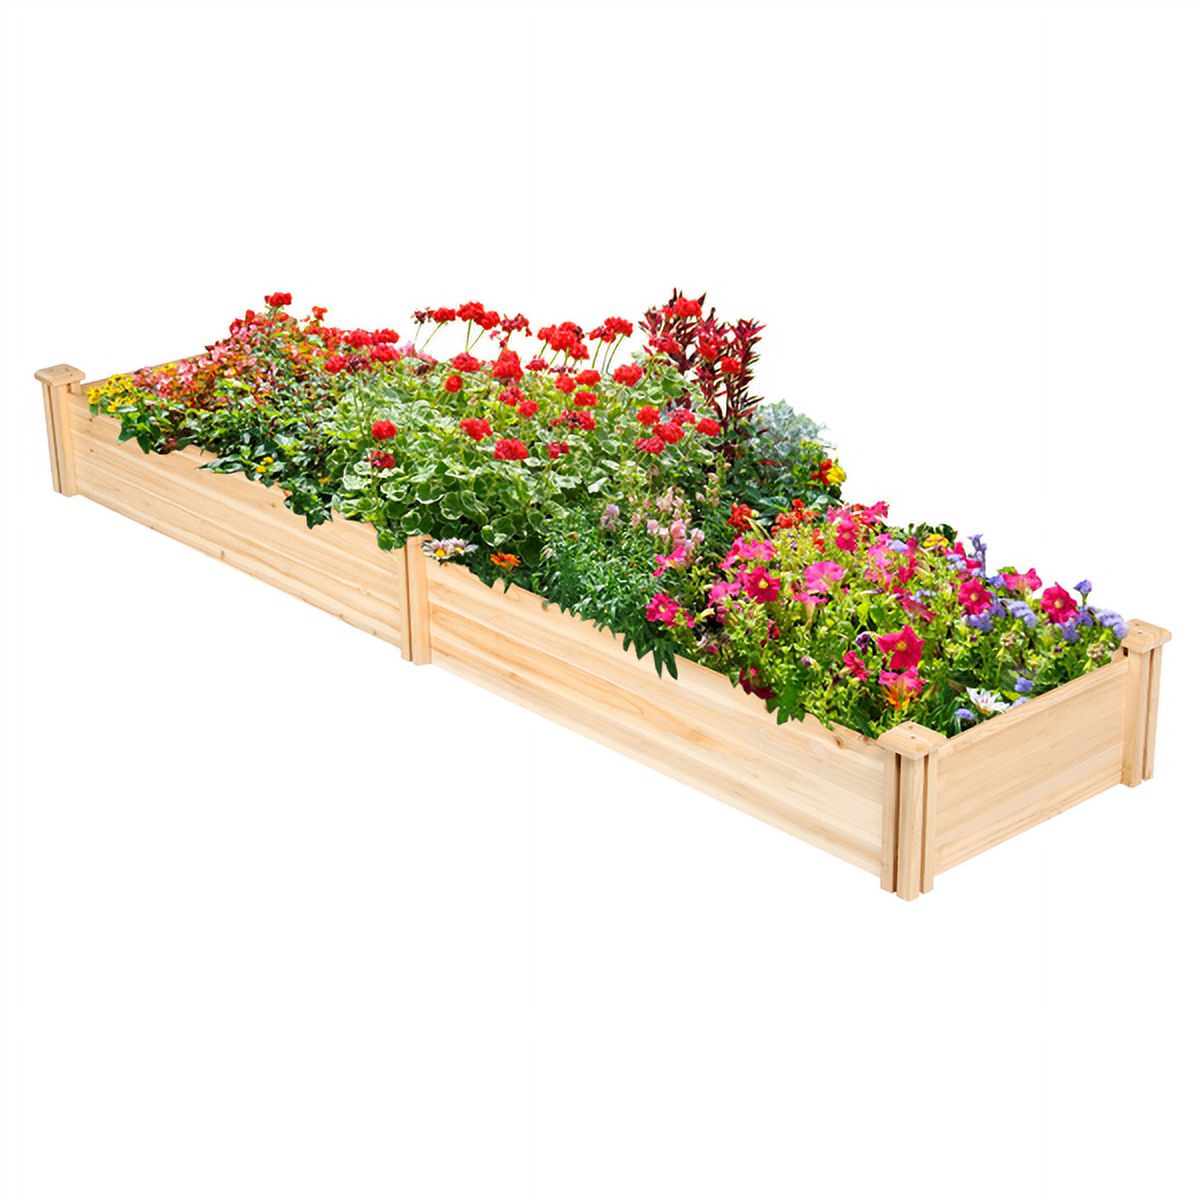 Alden Design Wooden Raised Garden Bed Planter Box for Patio Yard,Natural Wood - image 2 of 6